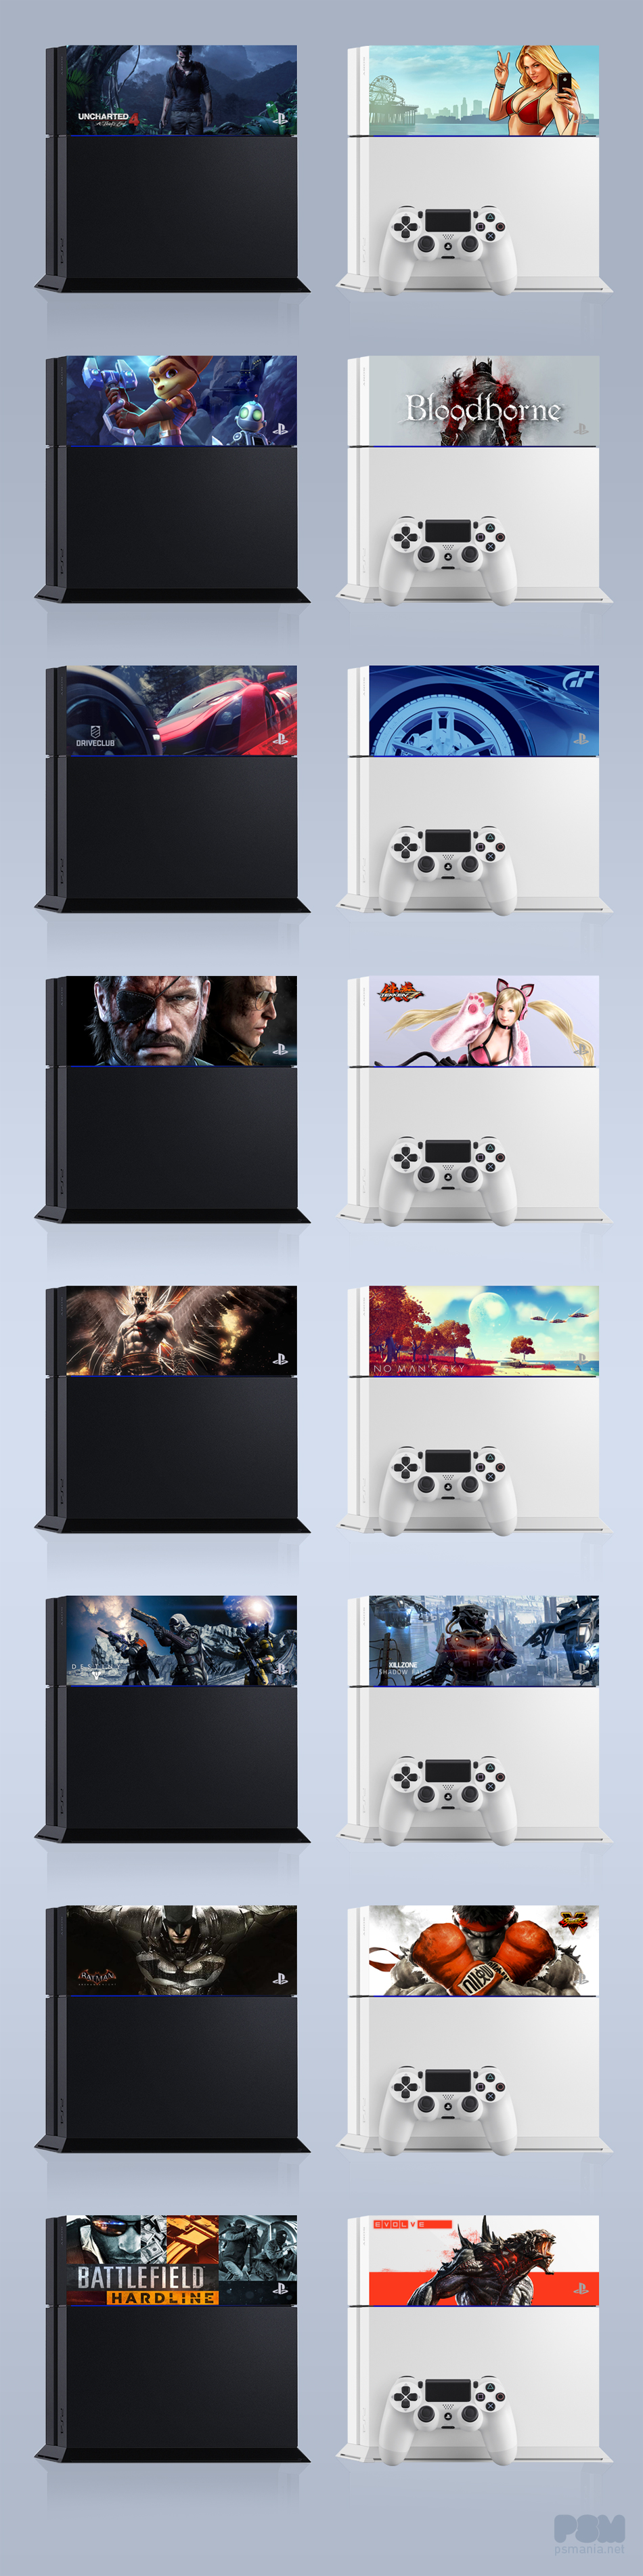 PS4-faceplates.jpg